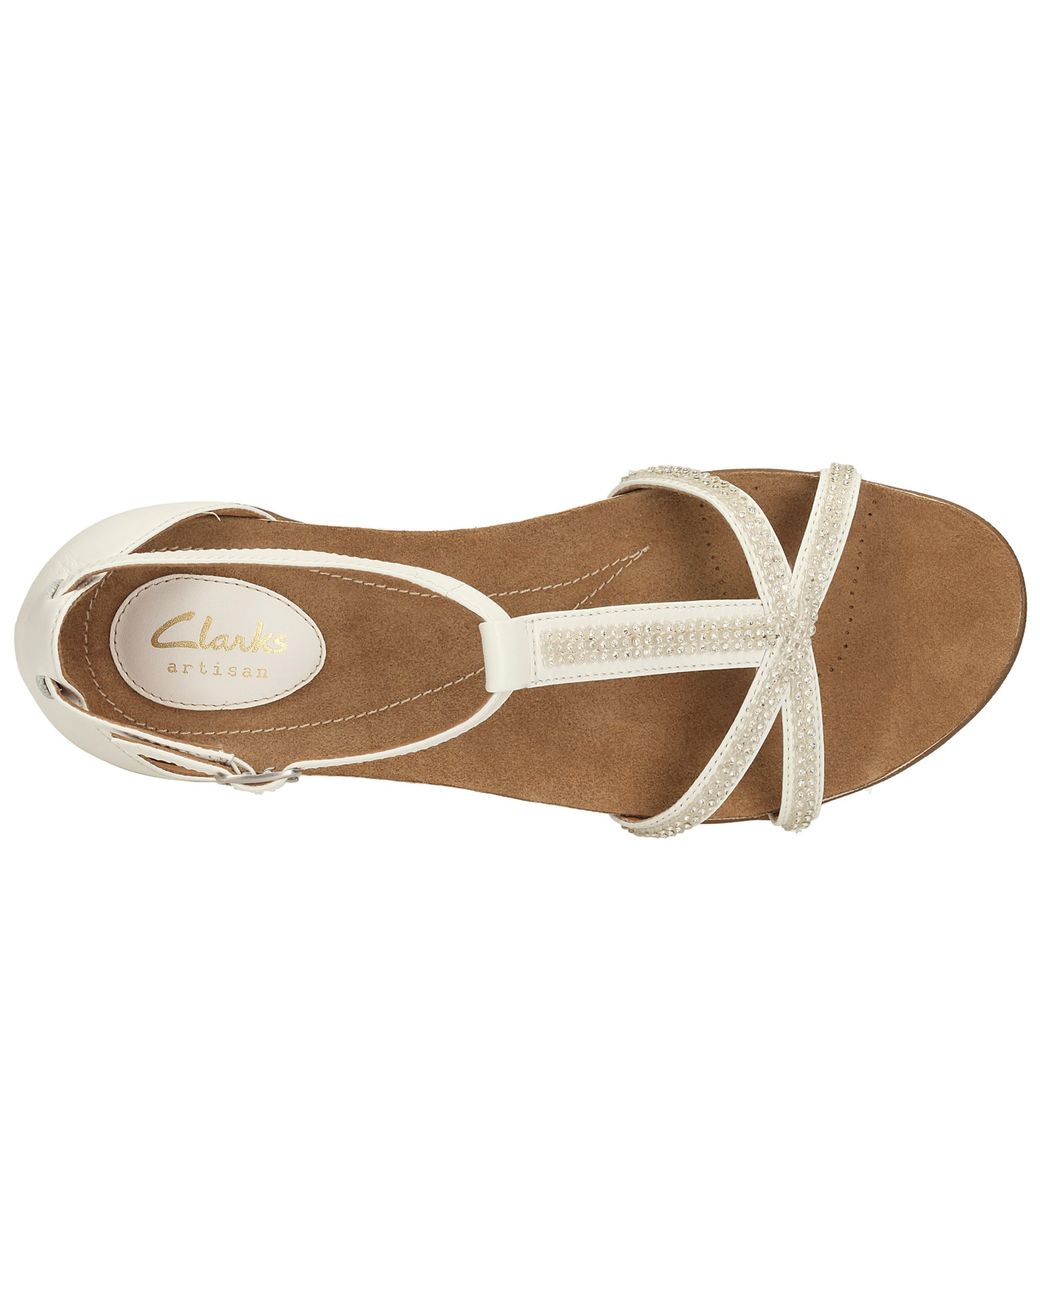 Clarks Raffi Star Leather Sandals in White | Lyst UK